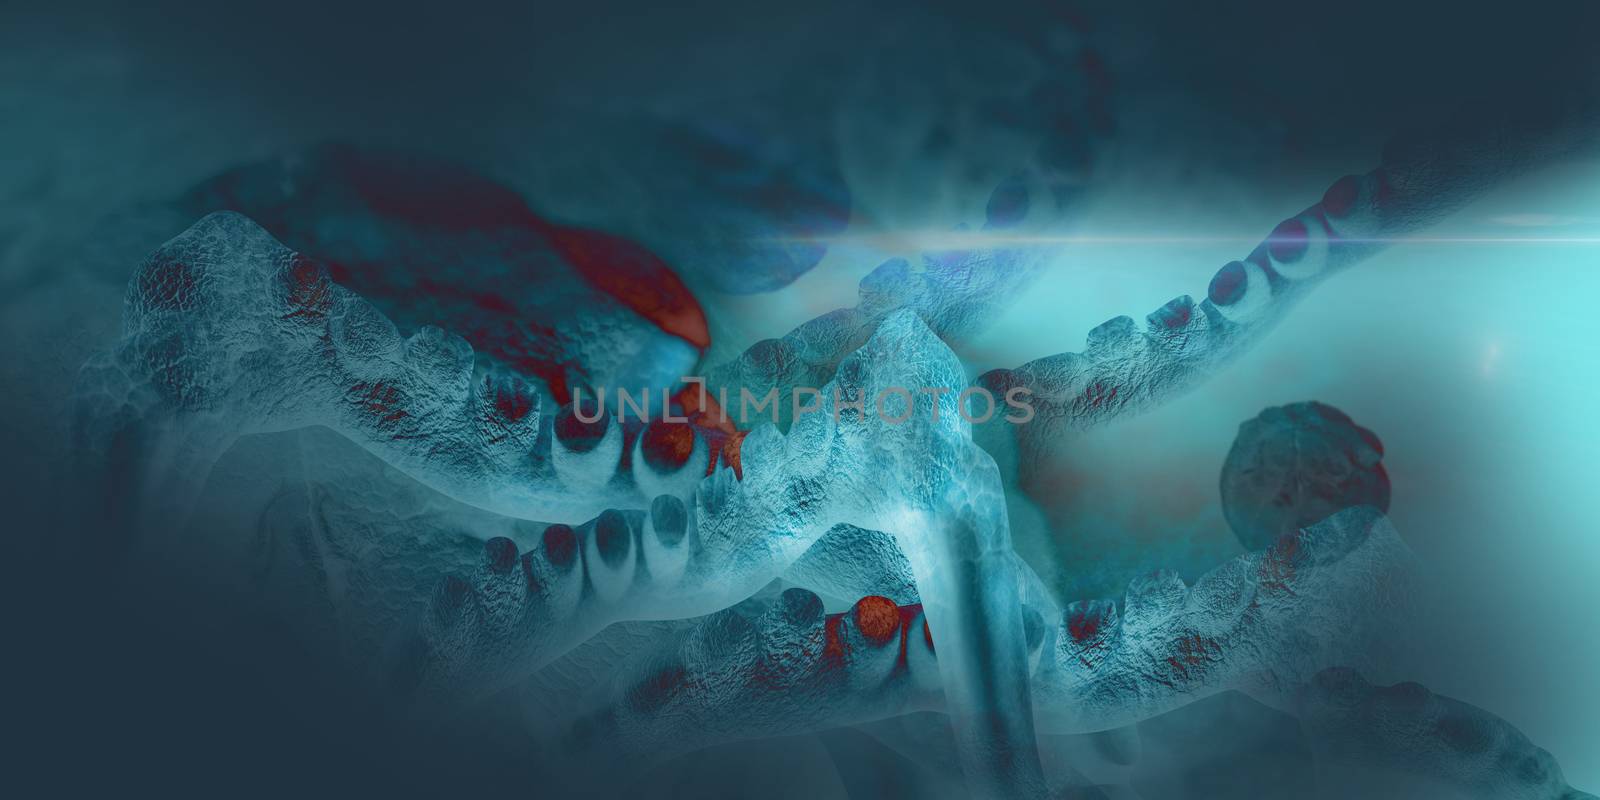 Digital 3d illustration of cancer cells in human body by vitanovski